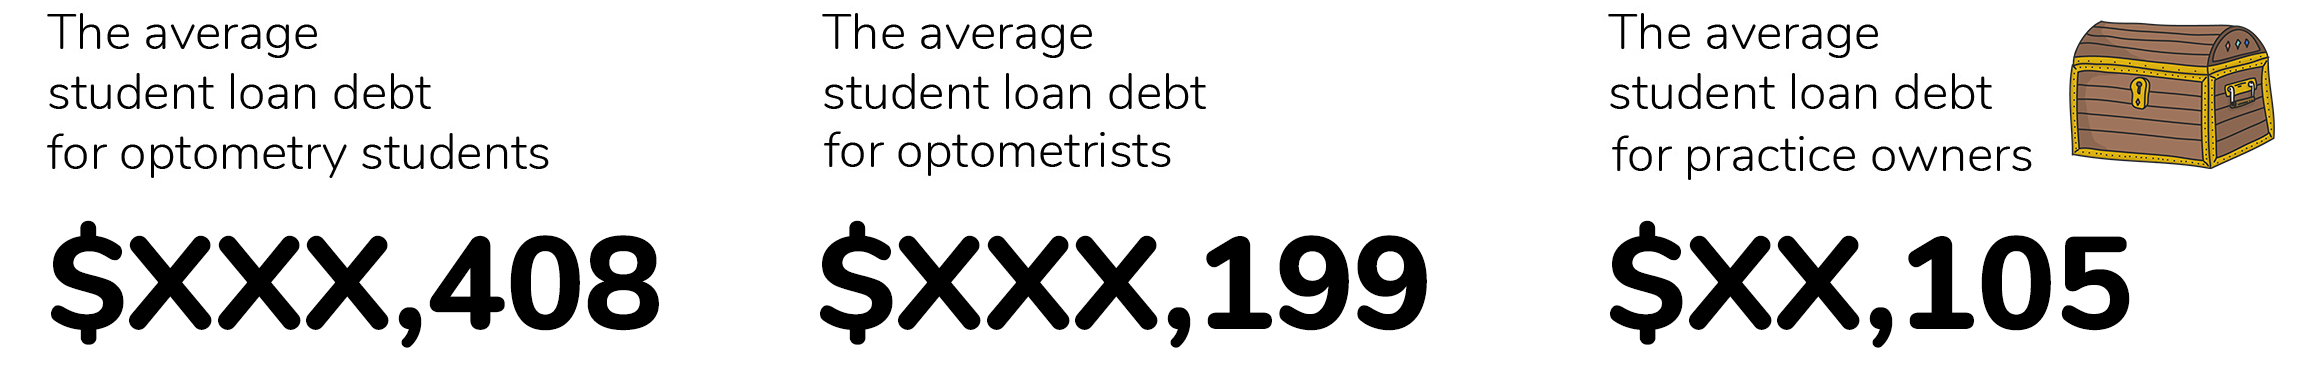 https://covalentcareers3.s3.amazonaws.com/media/original_images/2019-OD-report-optometry-student-loan-debt.png